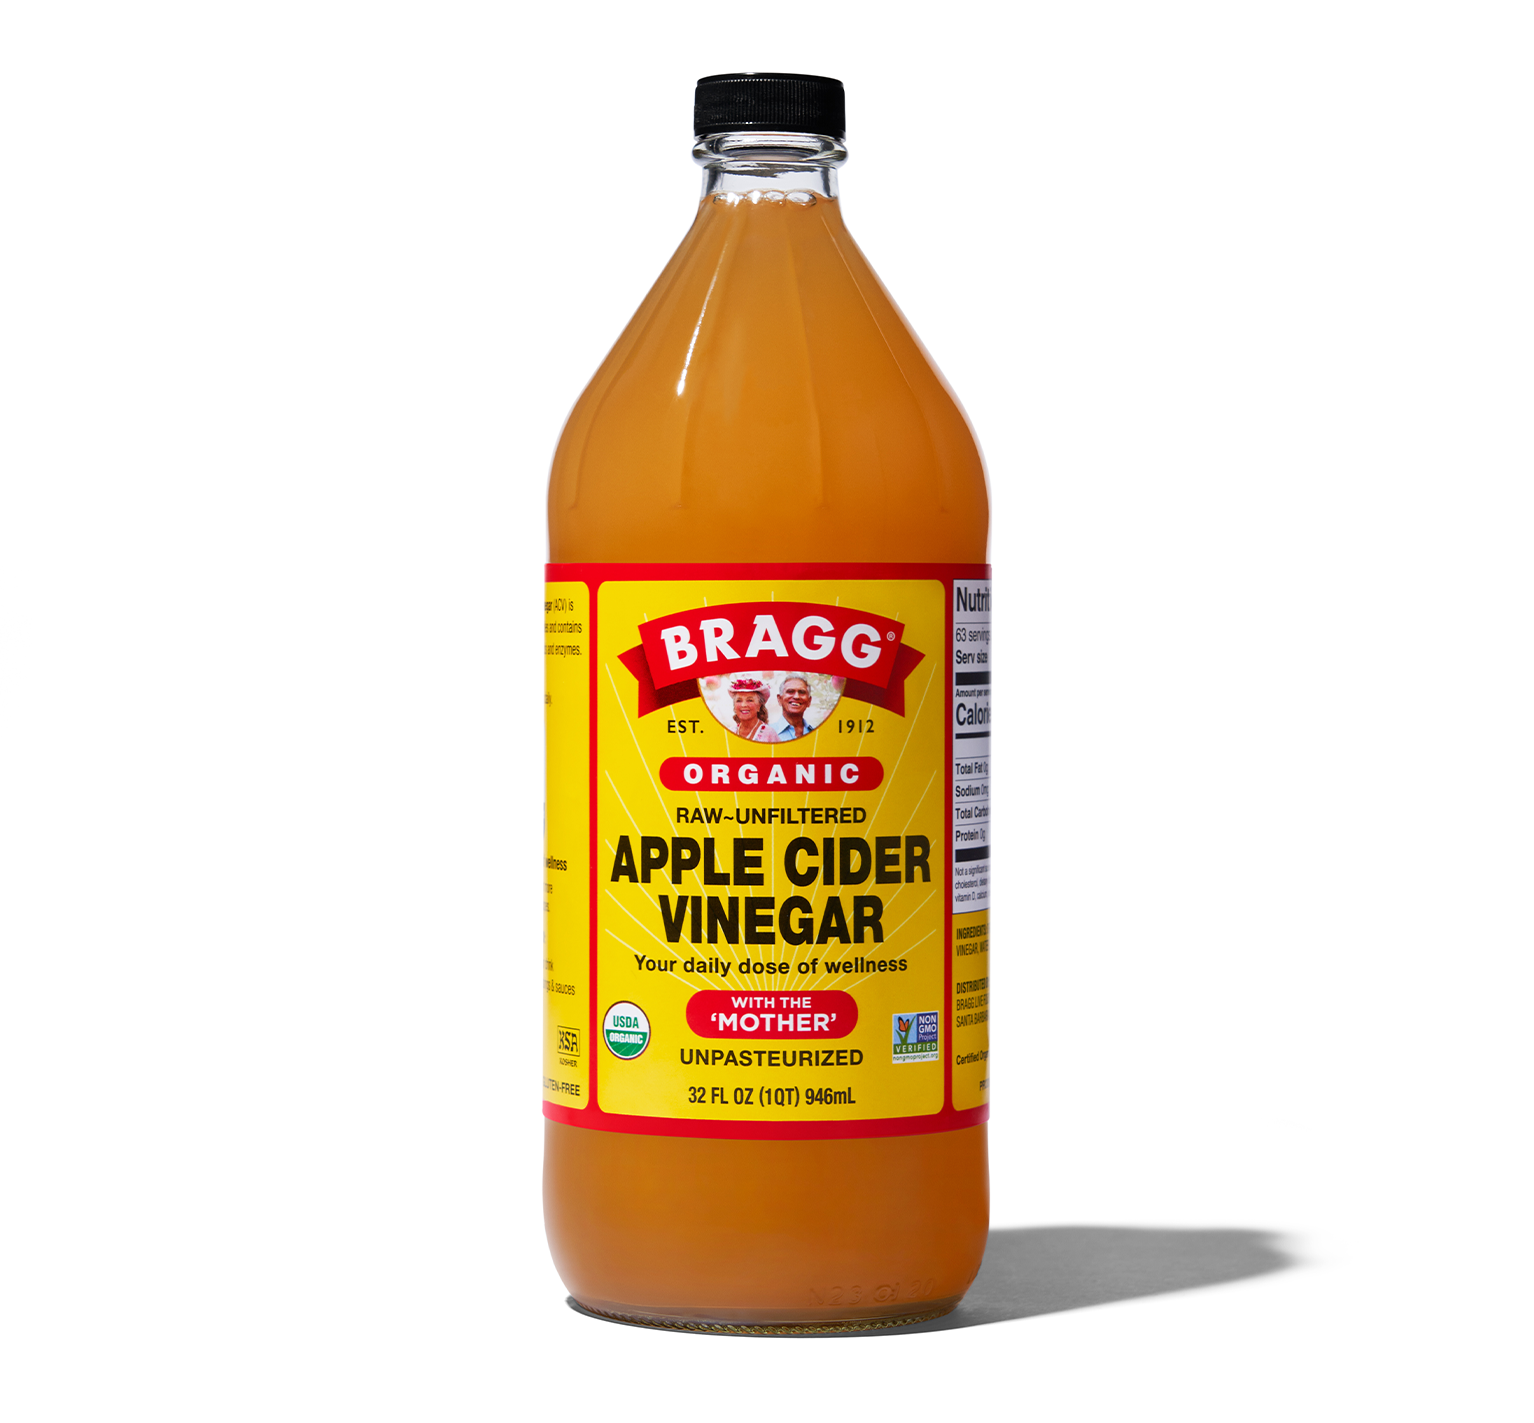 Bragg's Organic Apple Cider Vinegar, Raw Unfiltered - $15.09 - $95.98